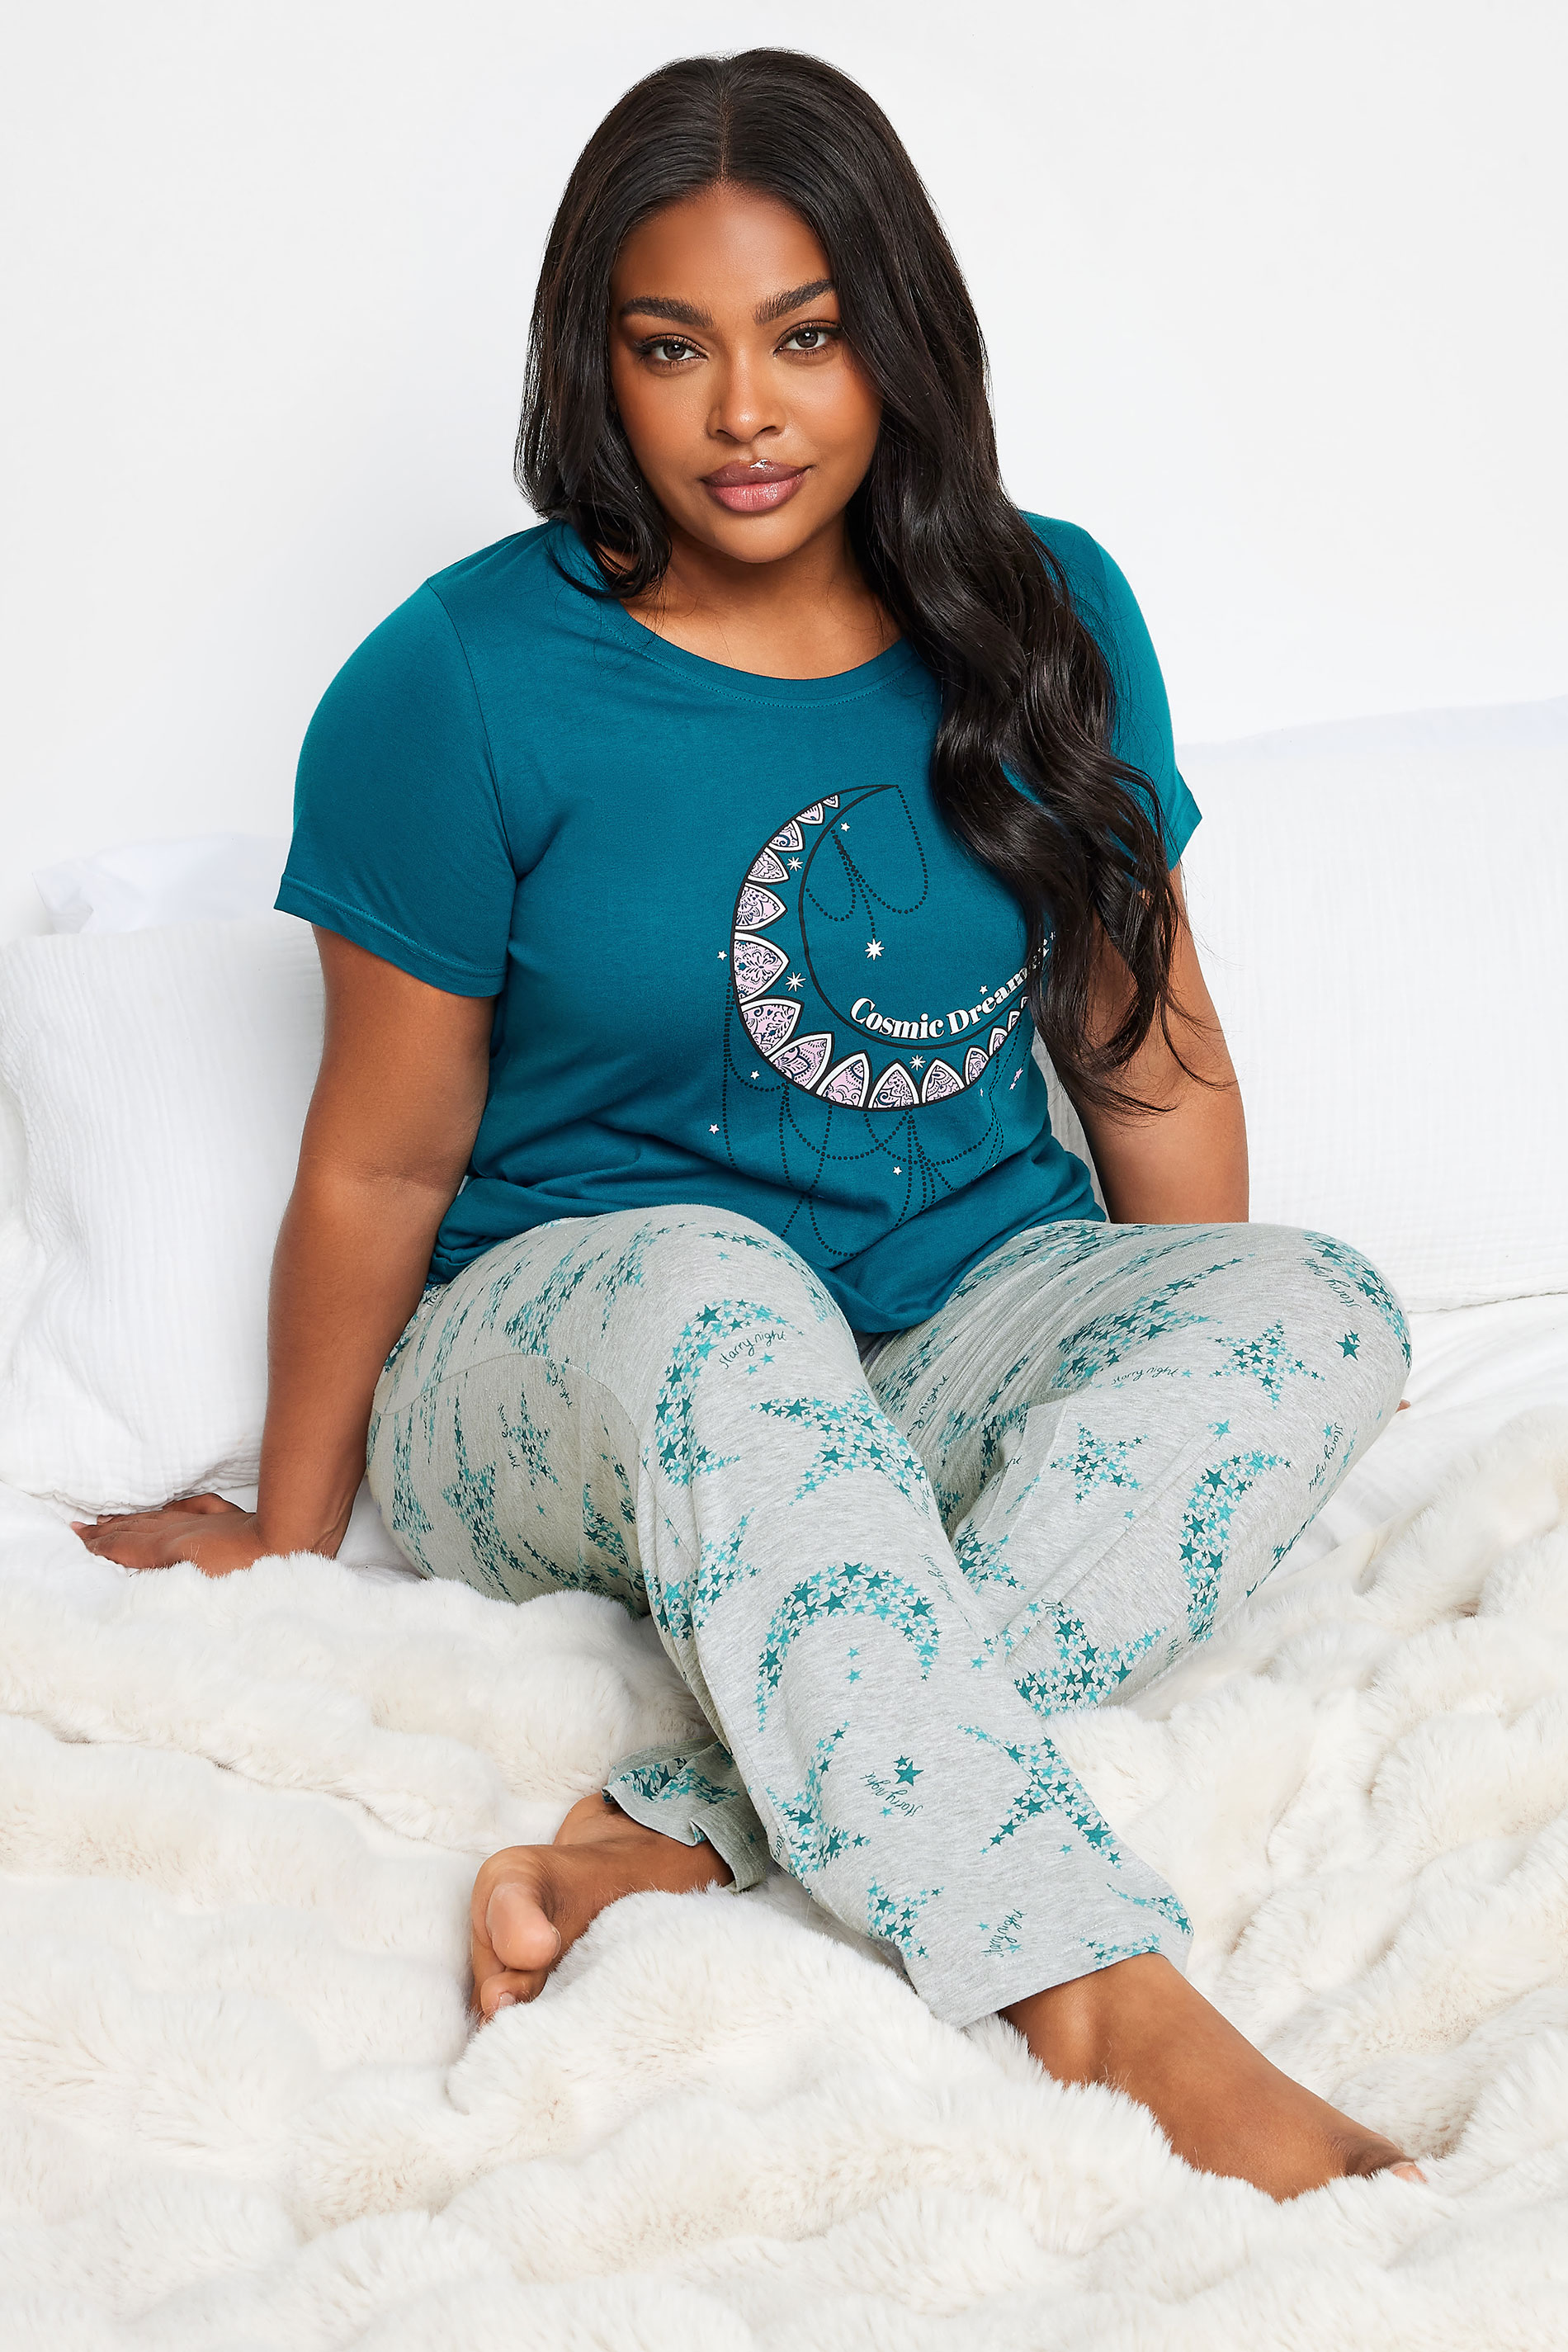 Long Tall Sally Tall Women's Grey Moon & Star Print Pyjama Set